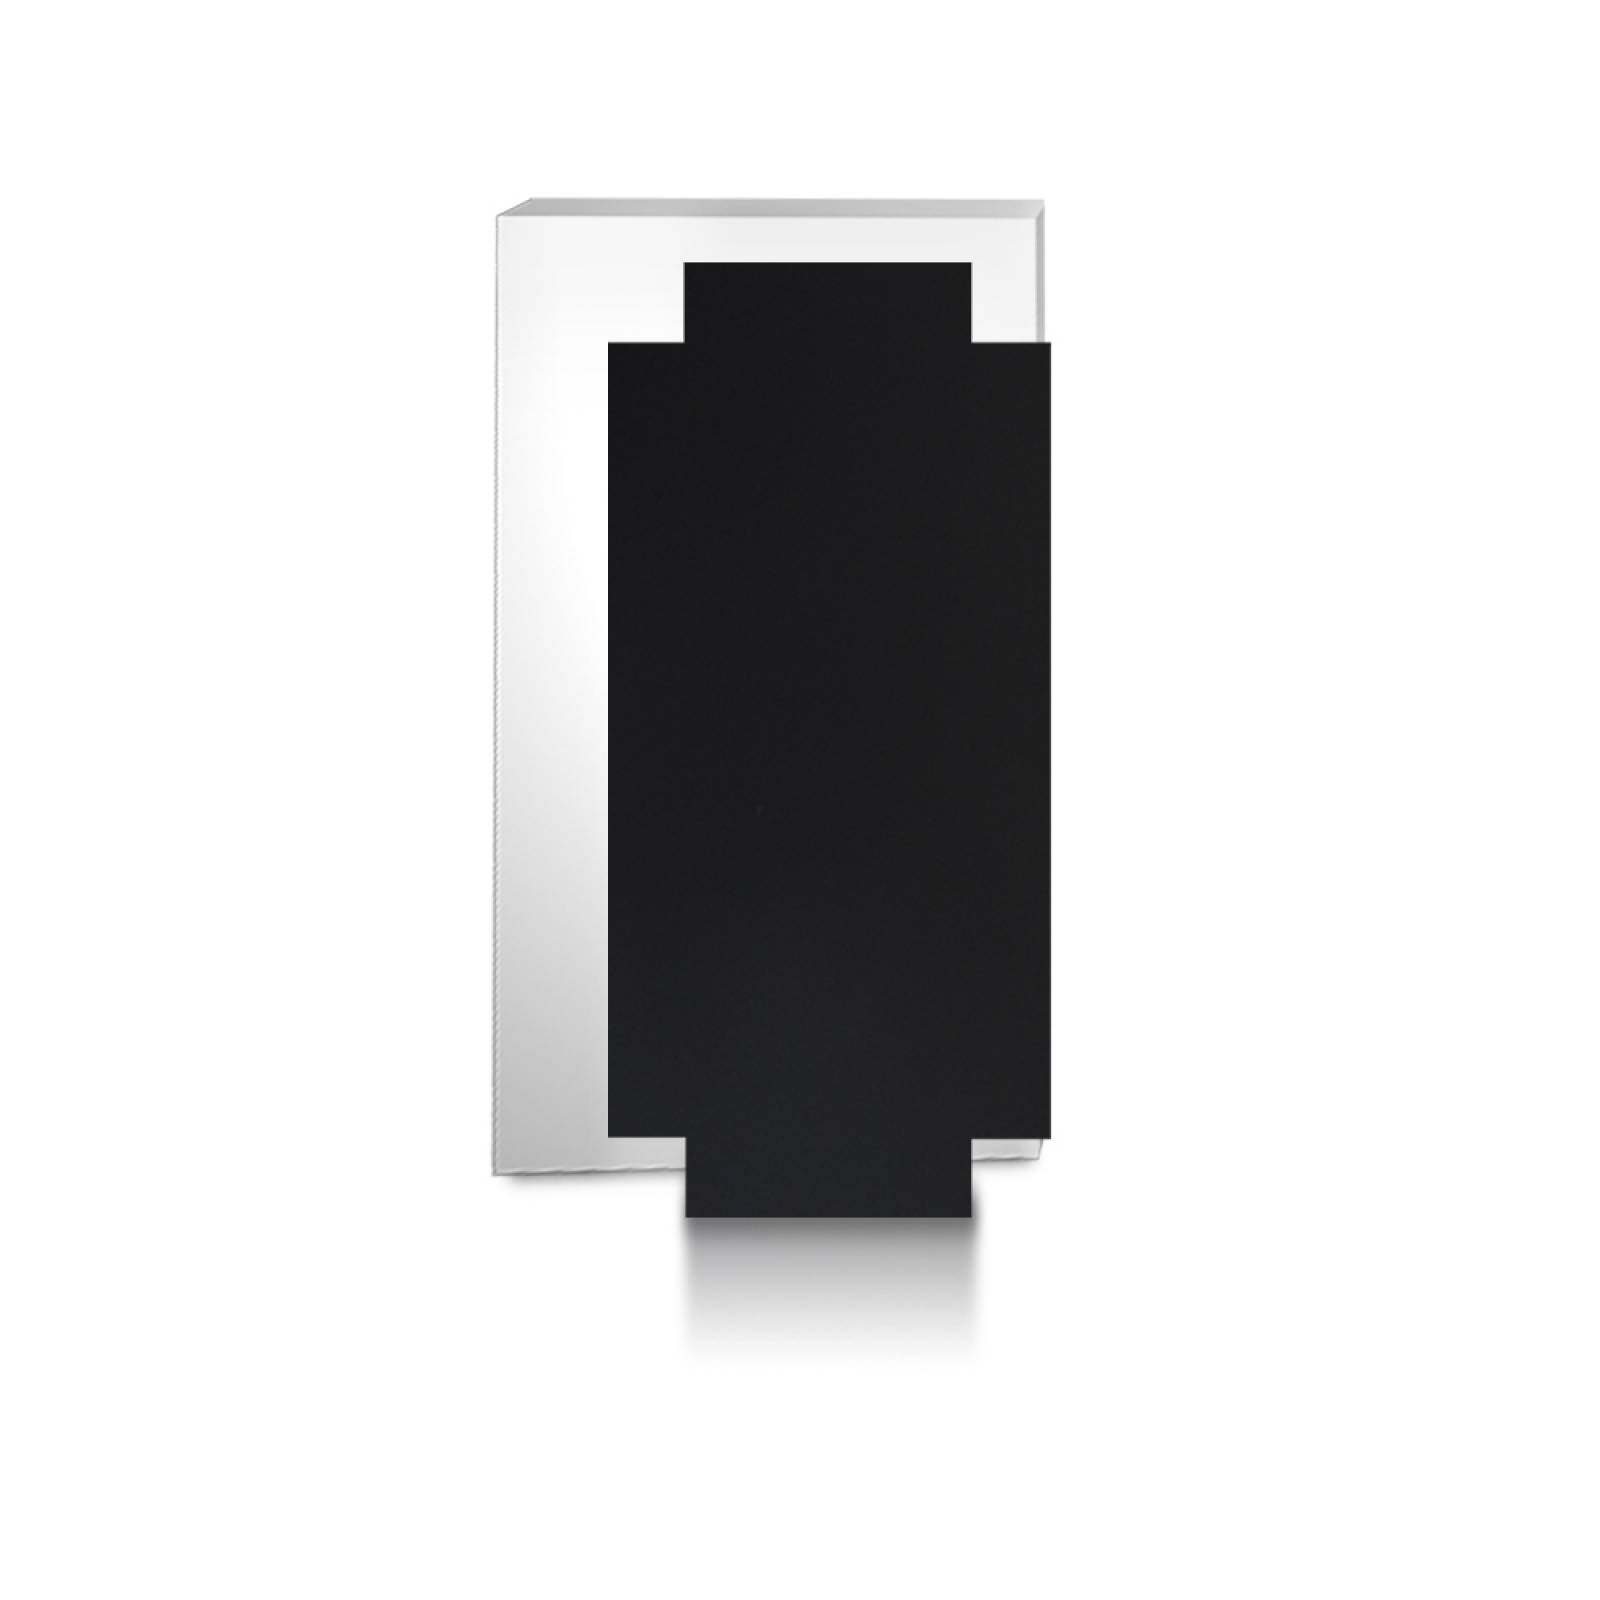 Aislante Cerámico Protector Térmico para Pared de 75 x 35 cm Negro, Mod: 6PTPNe